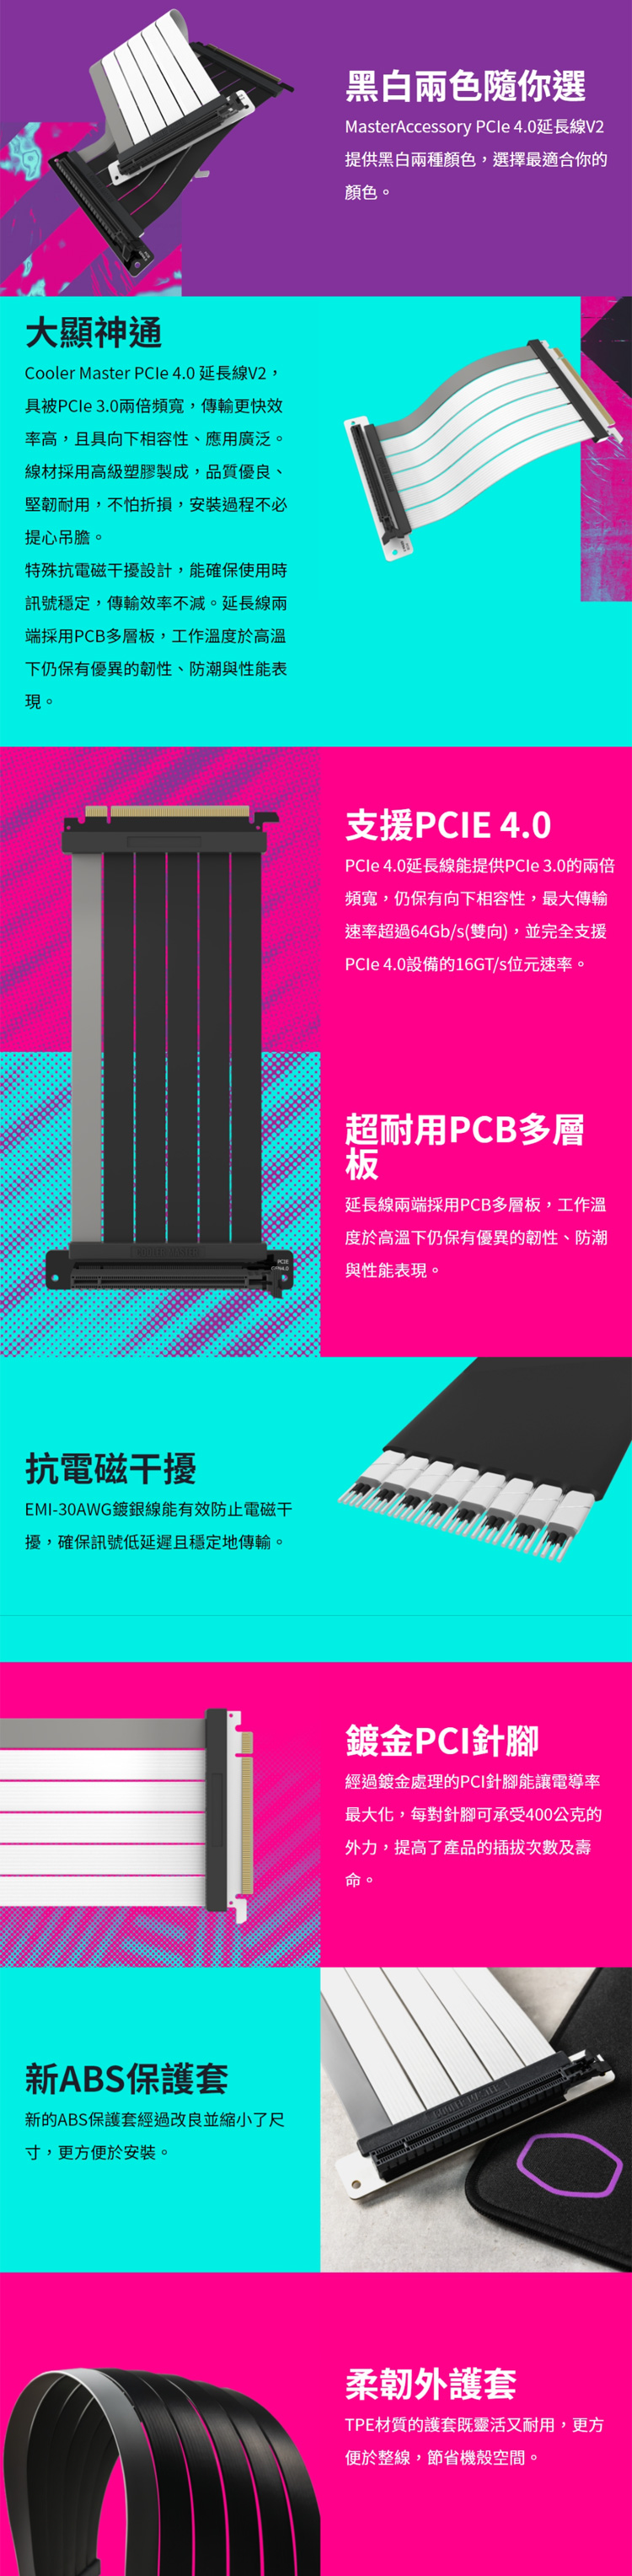 MASTERACCESSORY-PCIE-4.0-X16-200MM-內.jpg